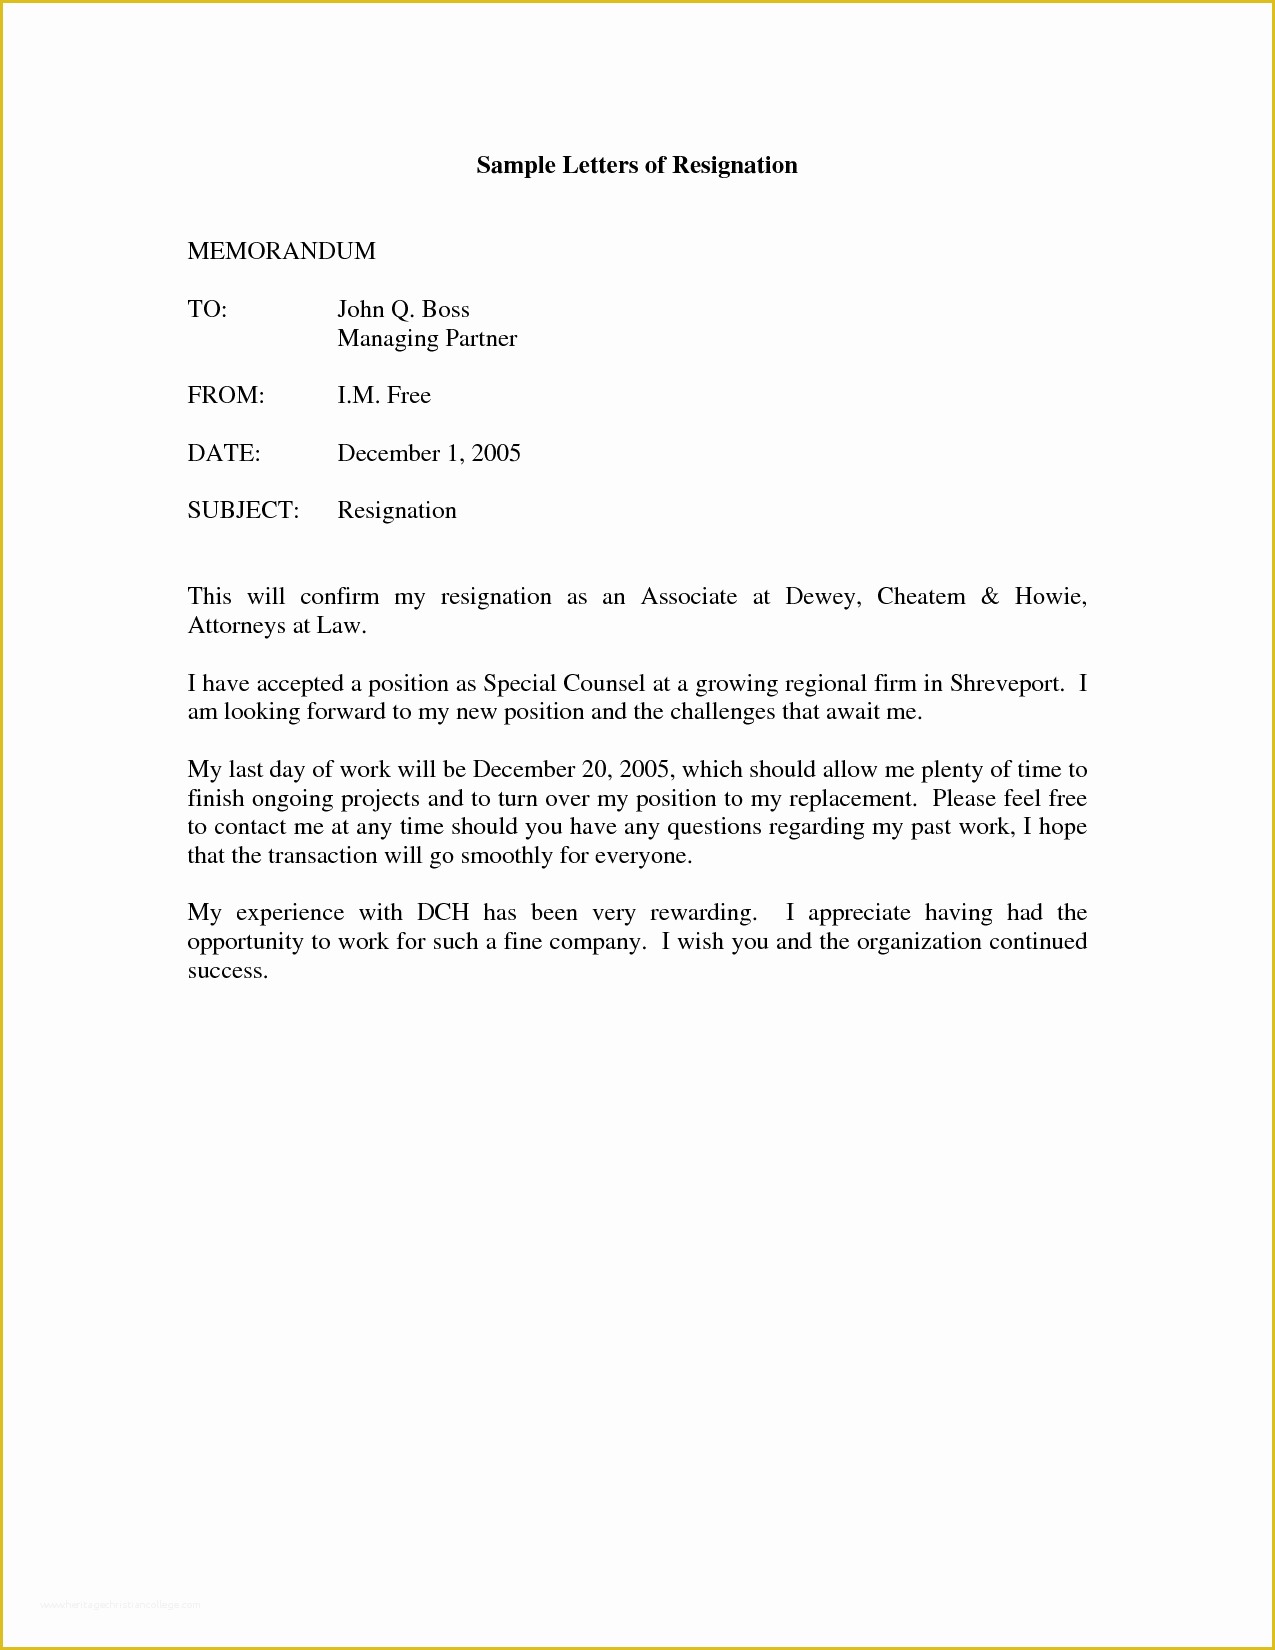 Resignation Letter Template Free Of Printable Sample Letter Of Resignation form